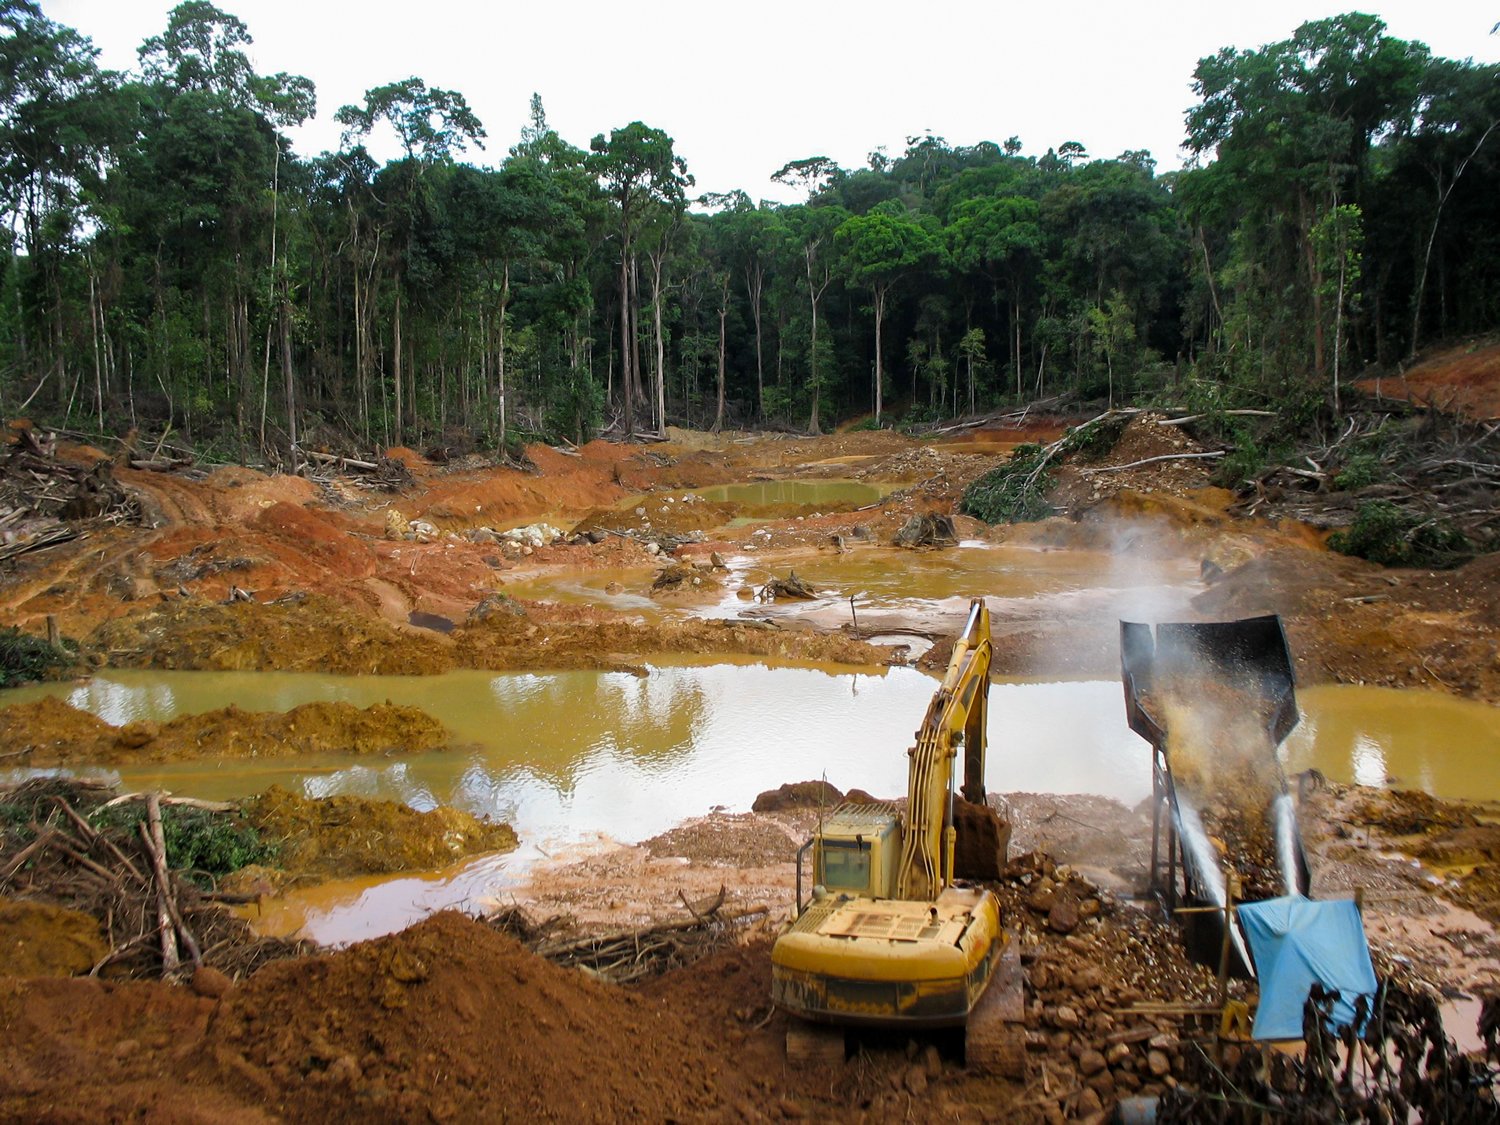 https://www.internetgeography.net/wp-content/uploads/2019/06/Gold-mining-in-the-Amazon-Rainforest.jpg